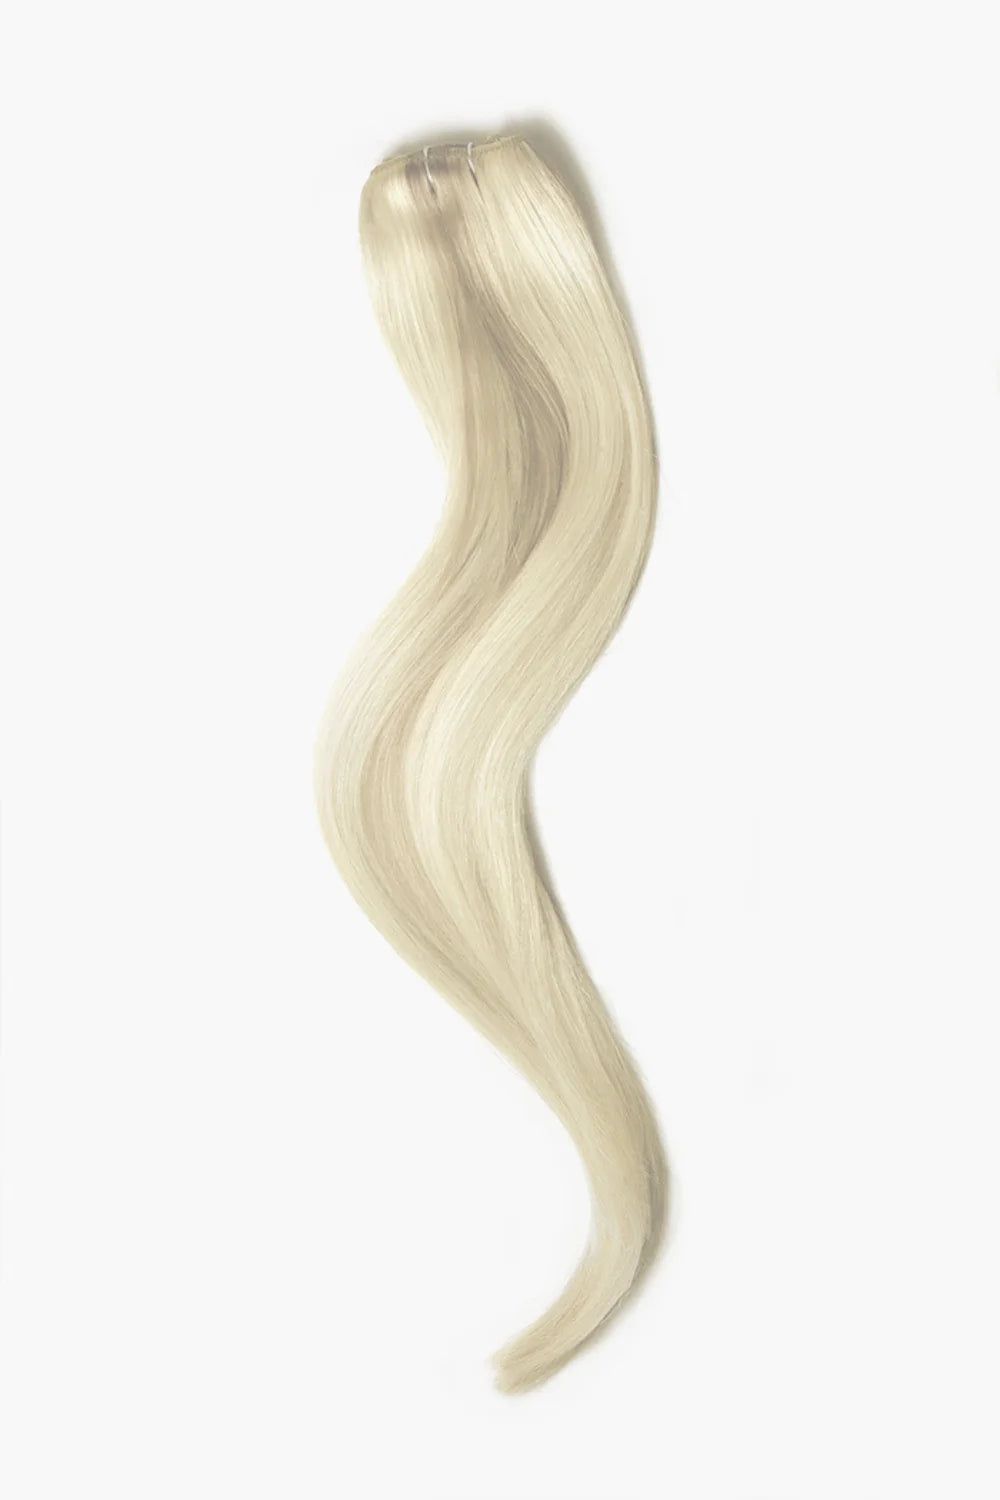 platinum blondeme one piece top up hair extension